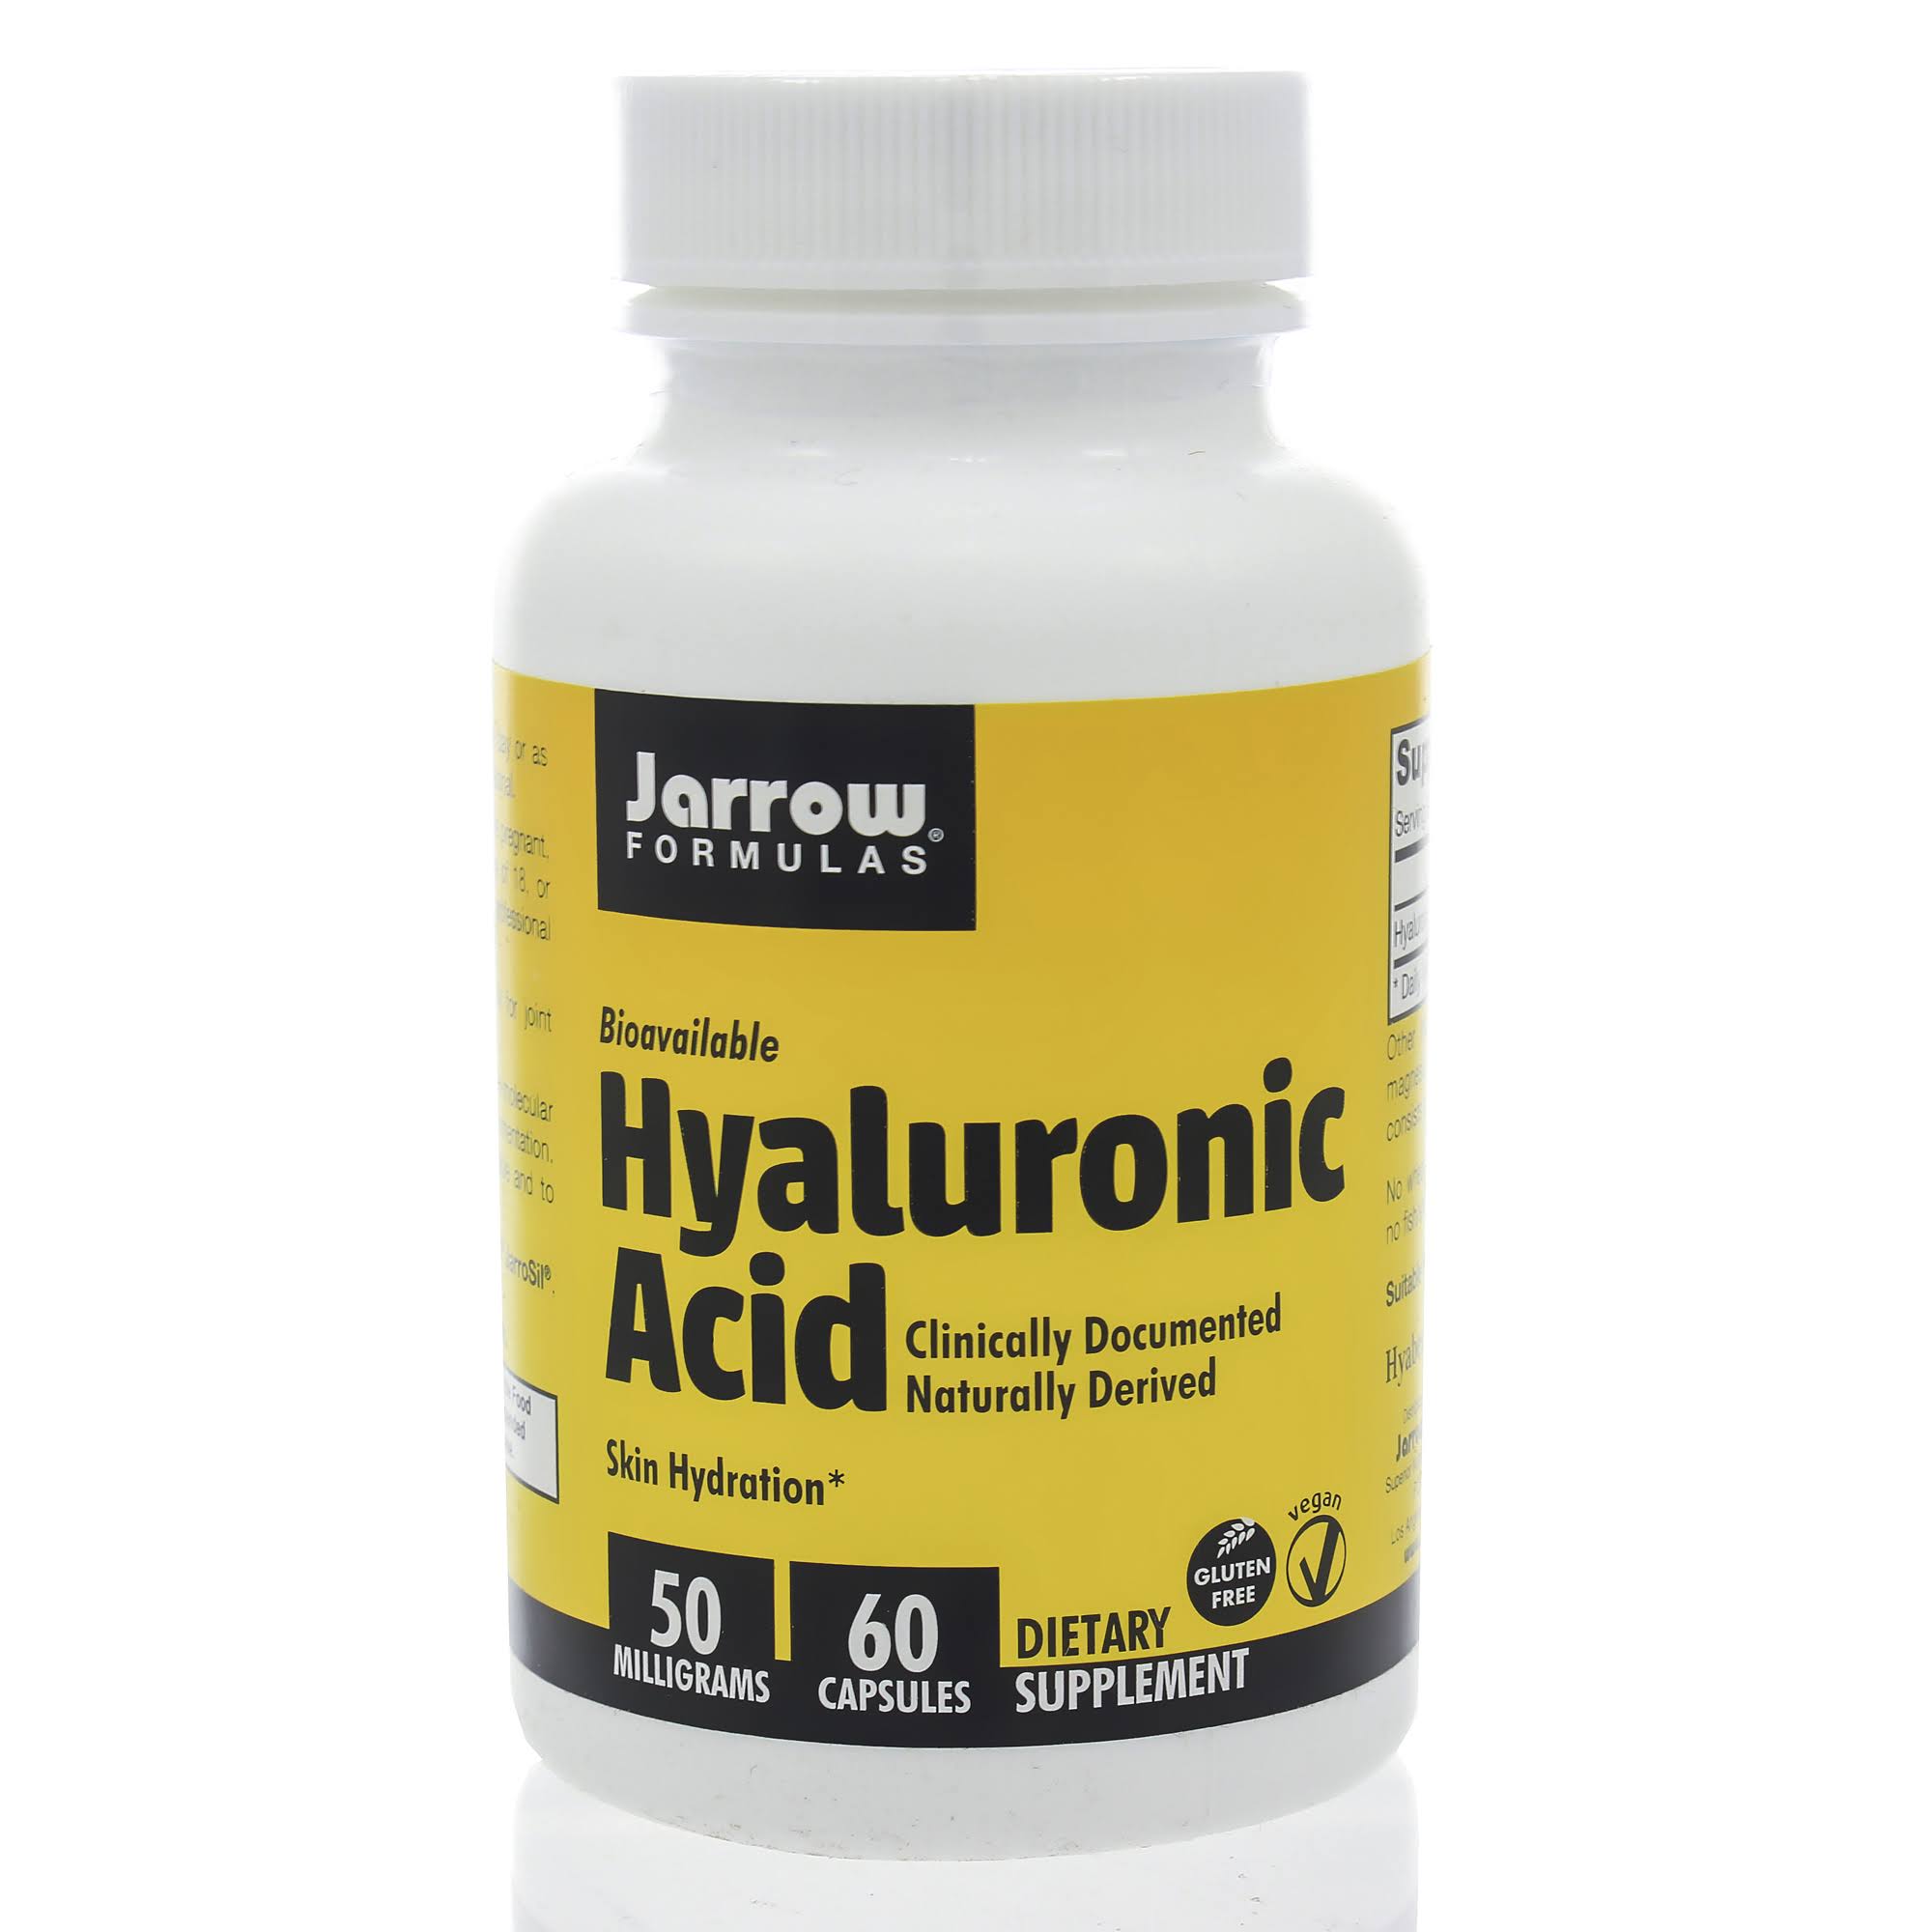 Jarrow Formulas Hyaluronic Acid - 50mg, 60 Capsules